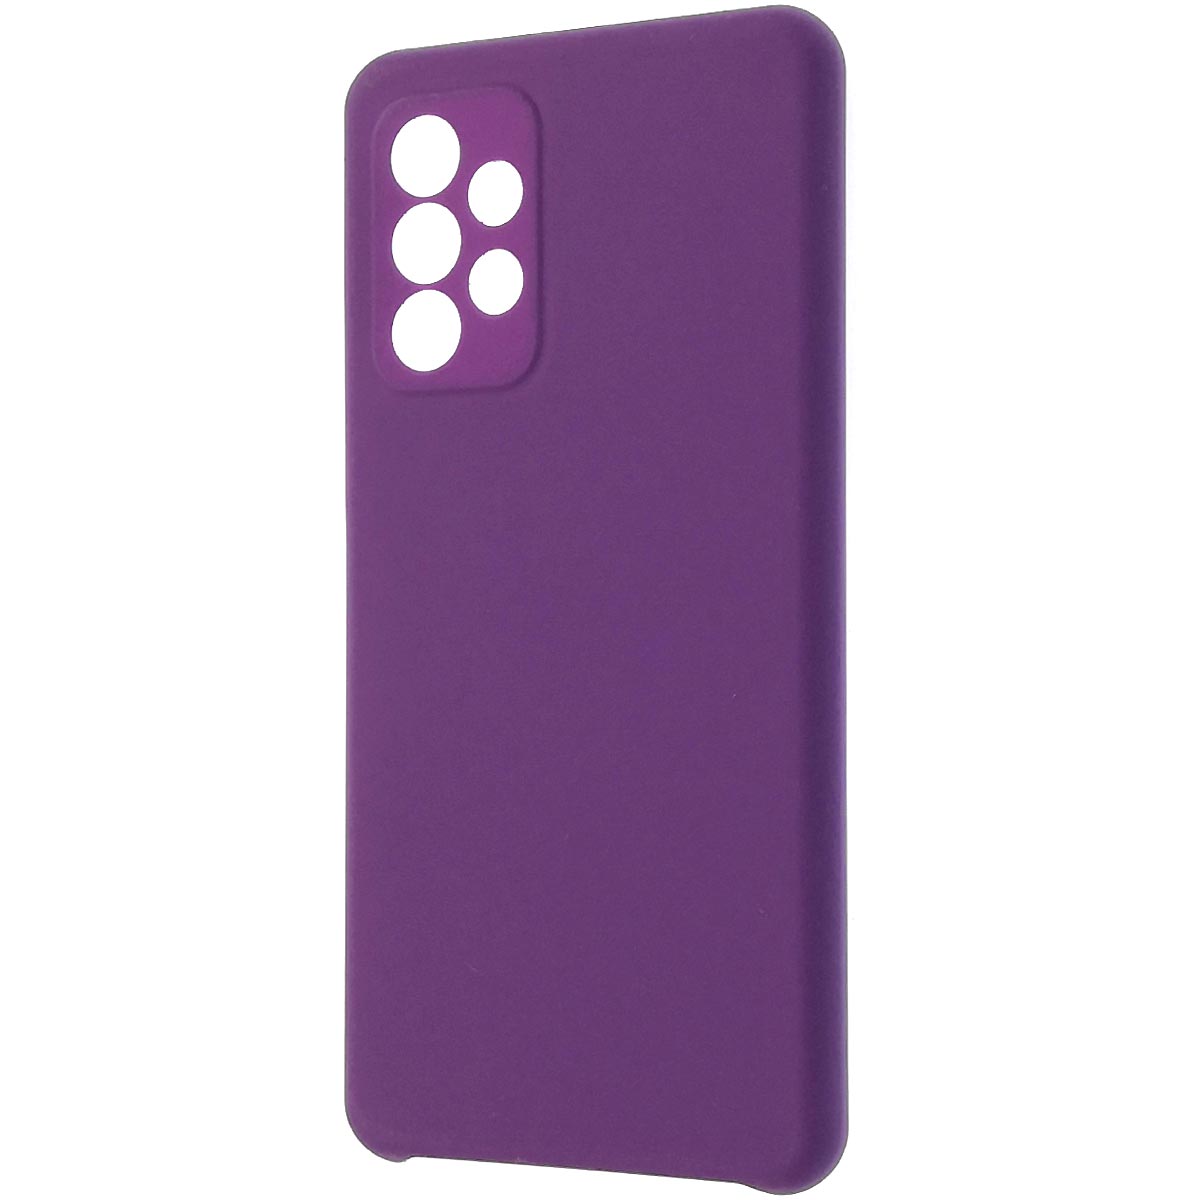 Чехол накладка Silicon Cover для SAMSUNG Galaxy A52 (SM-A525F), силикон, бархат, цвет фиолетовый